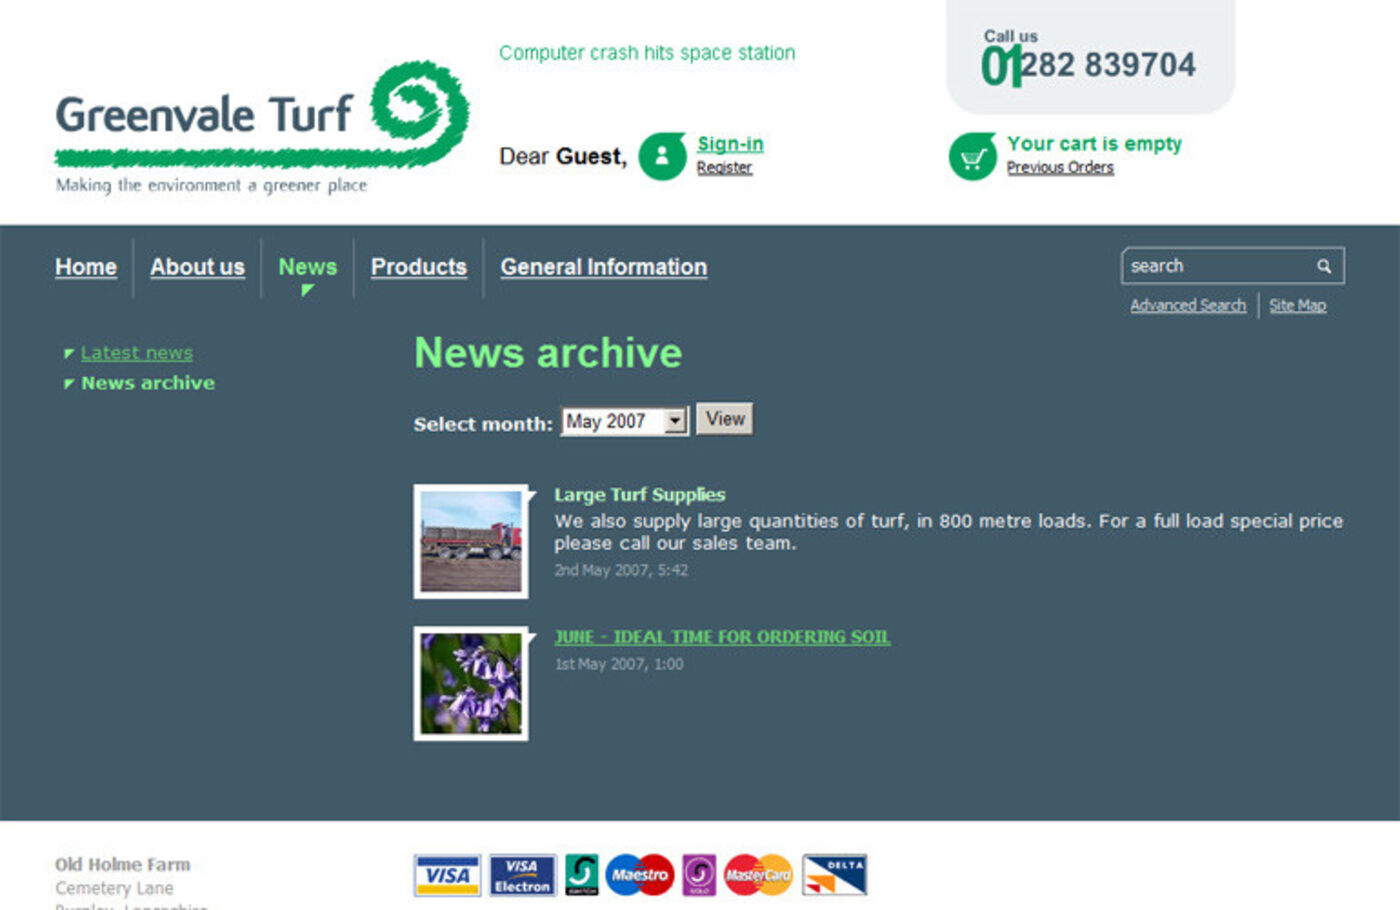 Greenvale Turf News archive